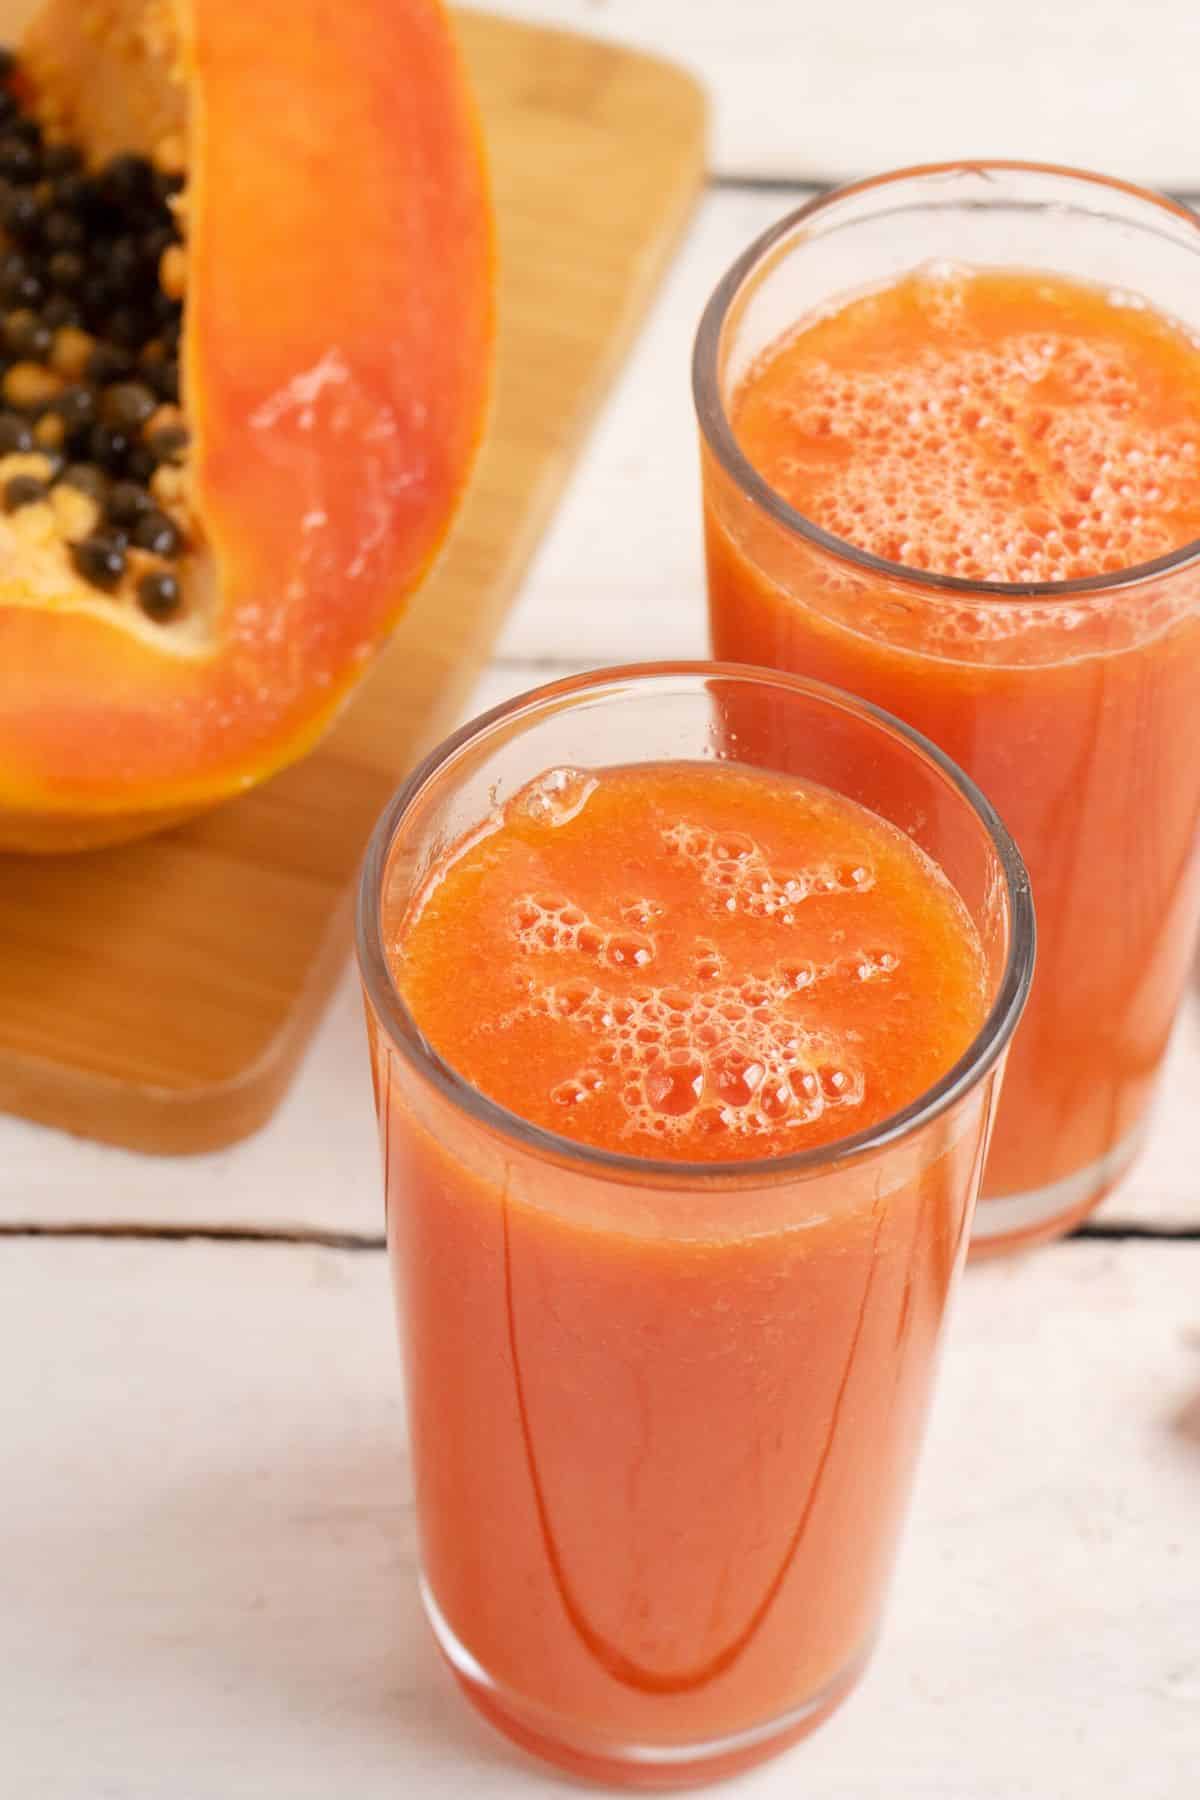 Two glasses of papaya juice next to a fresh papaya.